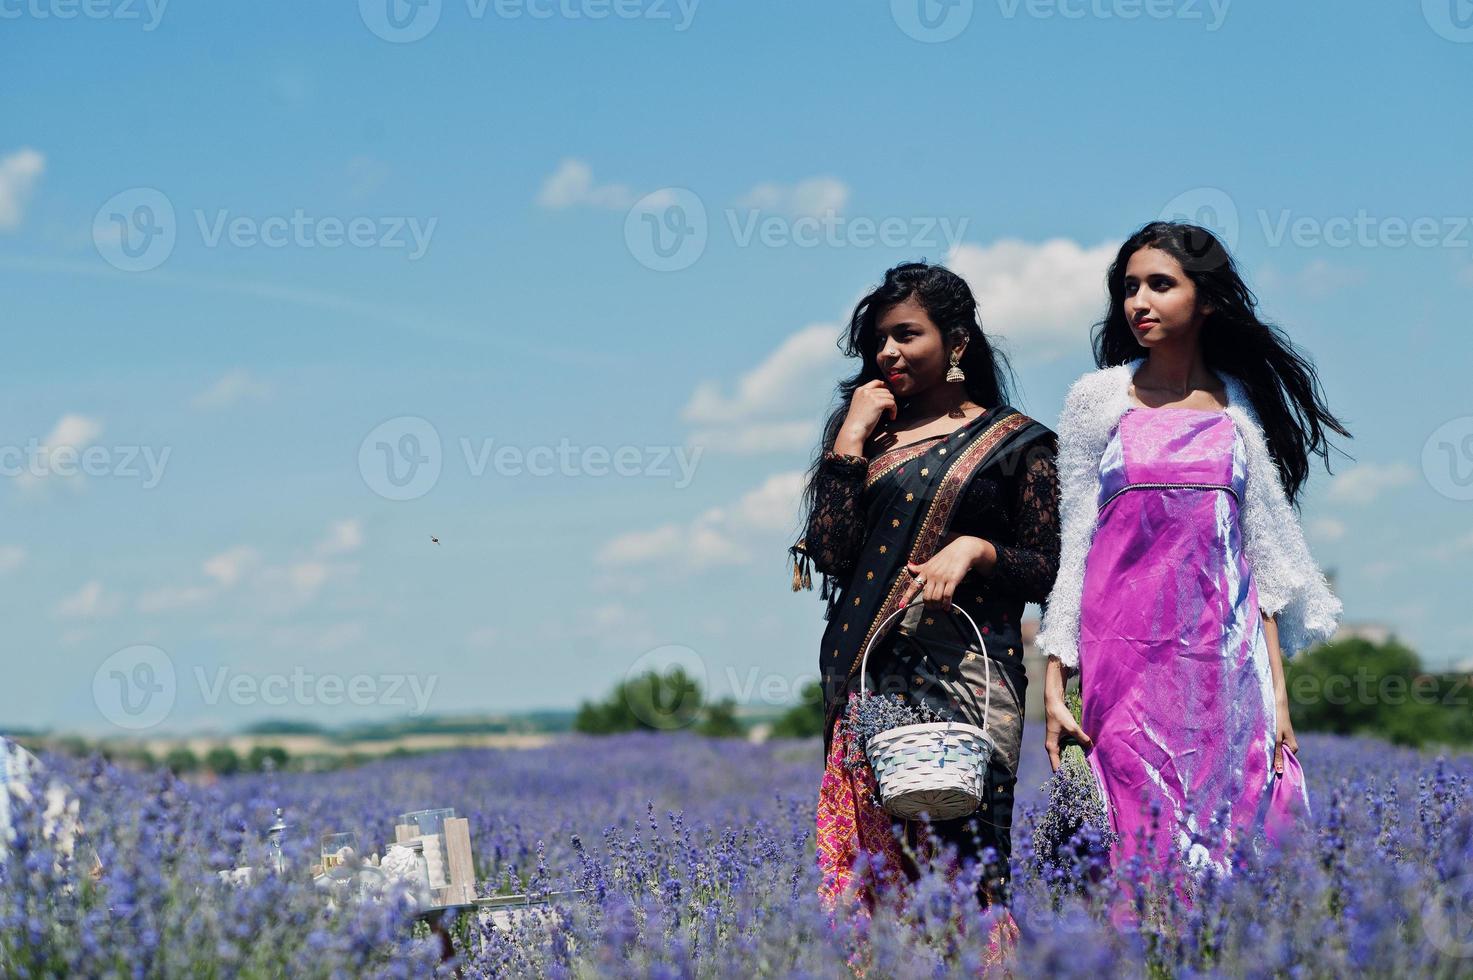 twee mooie indiase meisjes dragen saree india traditionele kleding in paars lavendelveld. foto